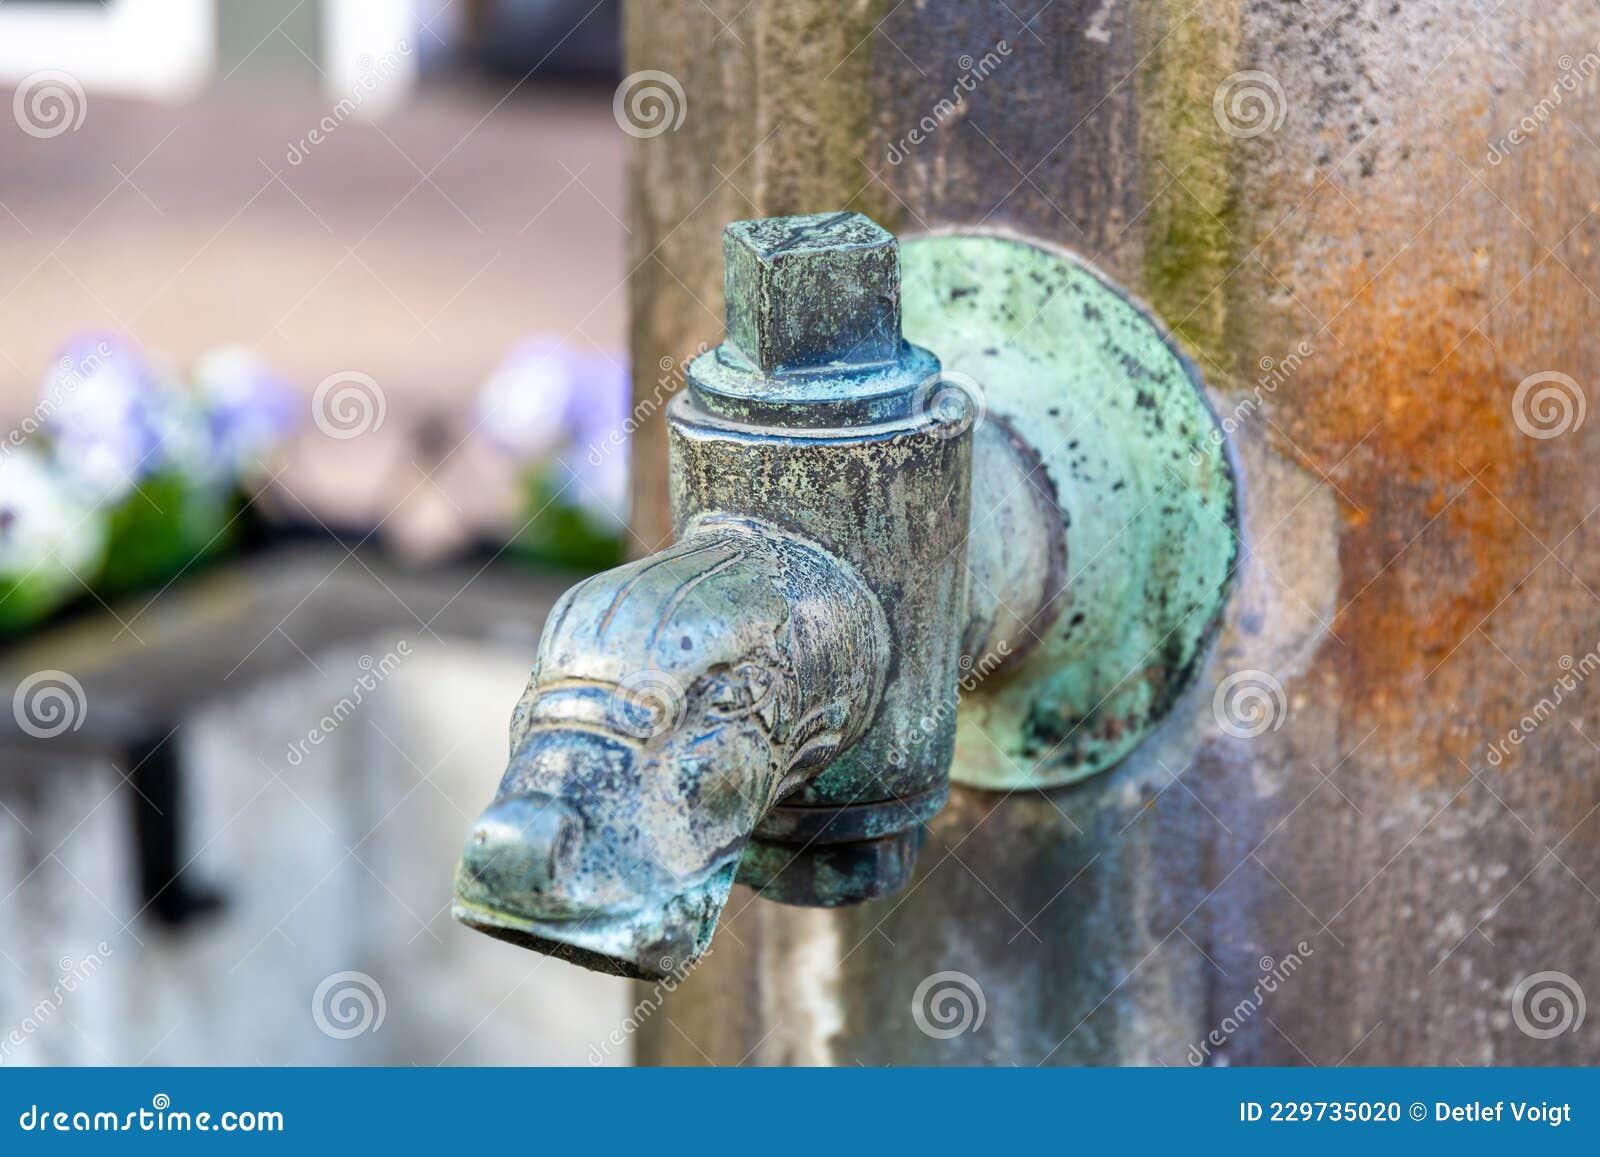 jam koepel Sitcom Oude Kraan Voor Water Met Corrosie Stock Foto - Image of gesloten,  metaalbewerking: 229735020